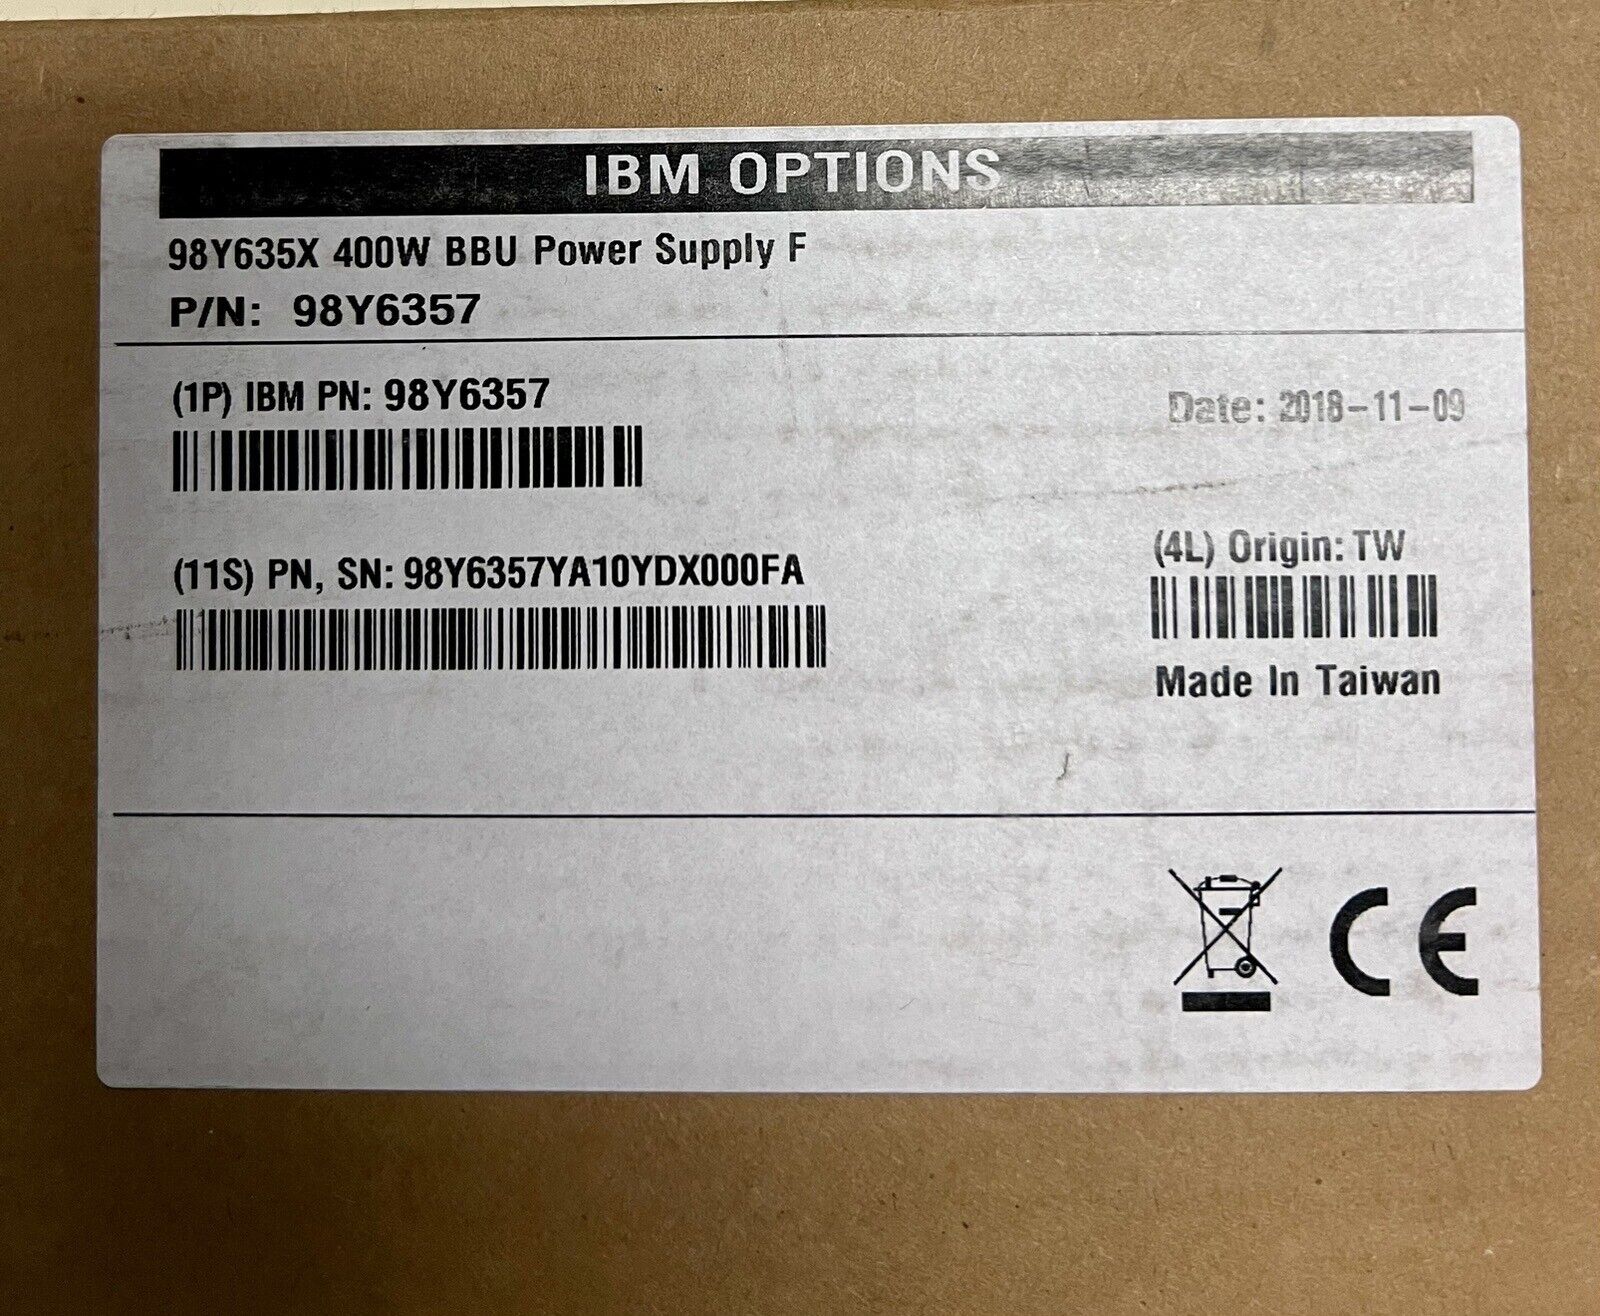 IBM 98Y6357 400W BBU Power Supply F P2C Battery Backup Ready AC Power Supply